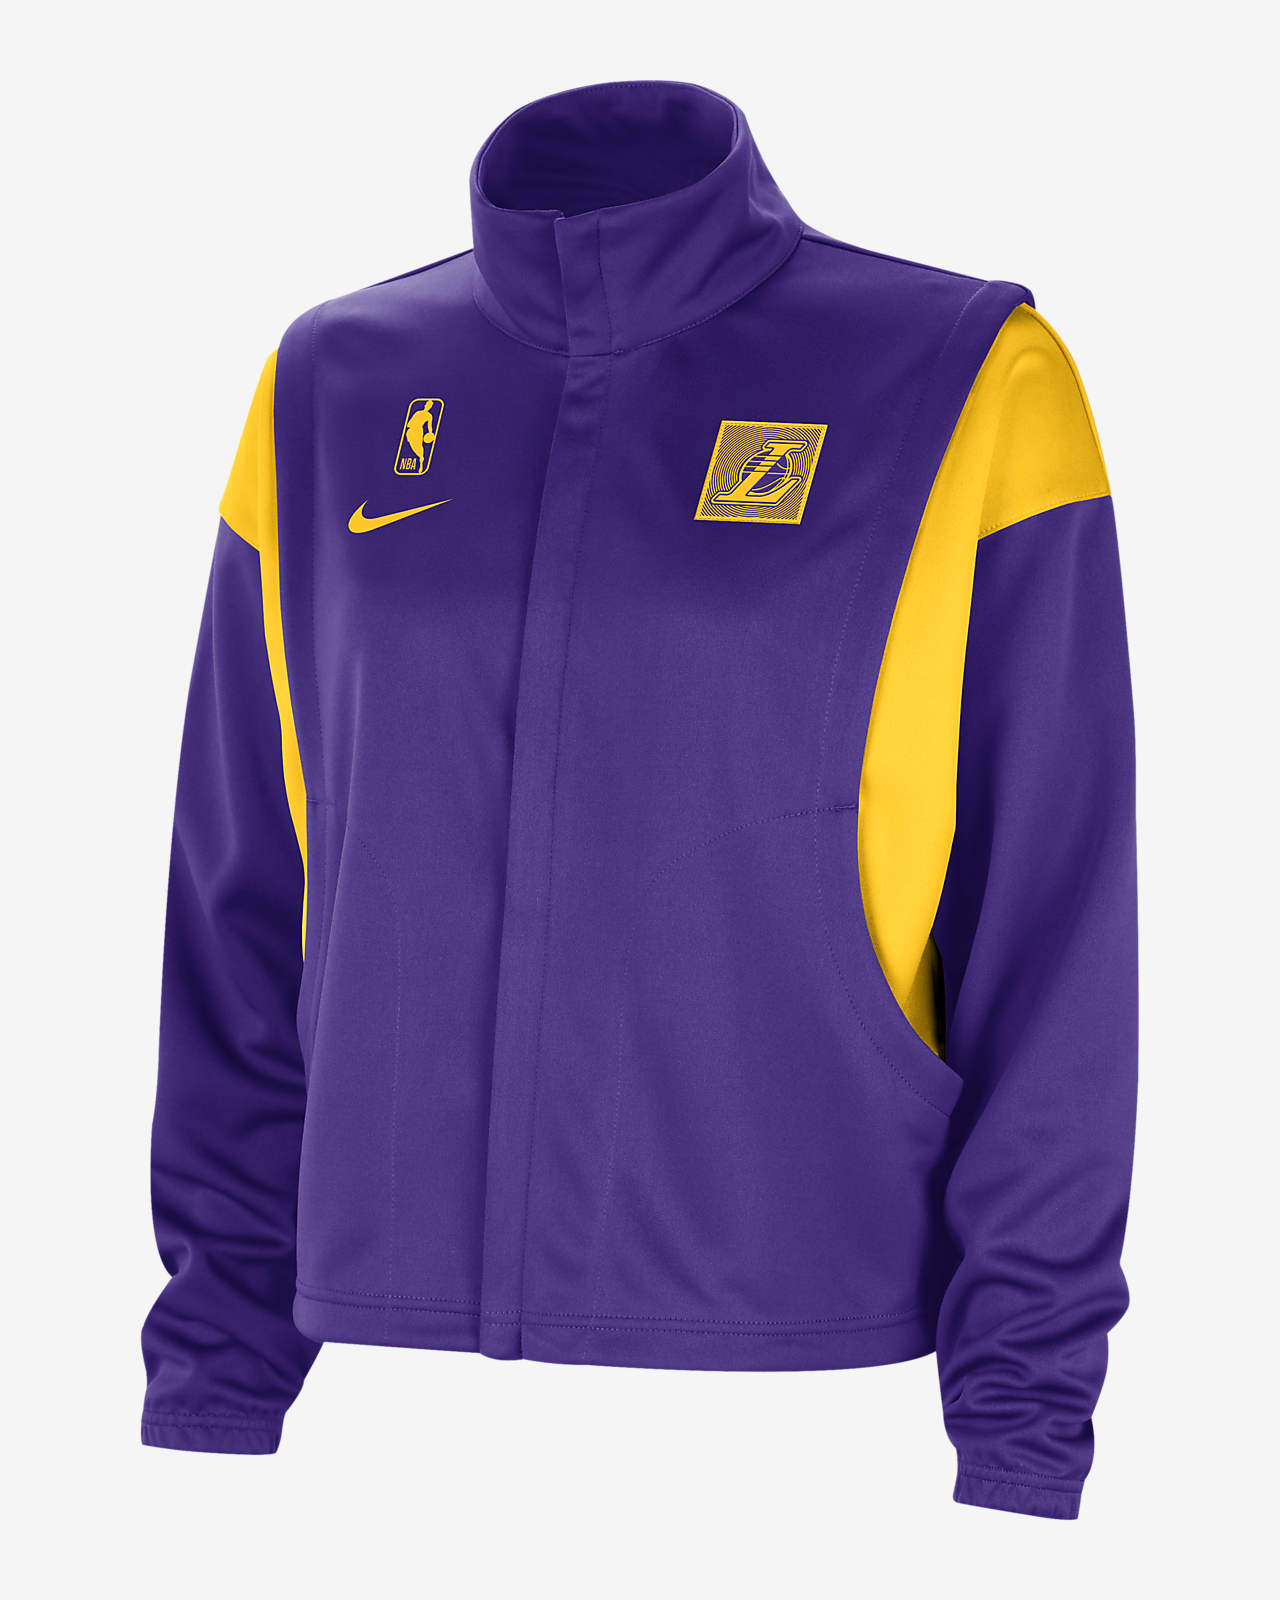 Nike / Women's Los Angeles Lakers Yellow Dri-Fit V-Neck T-Shirt